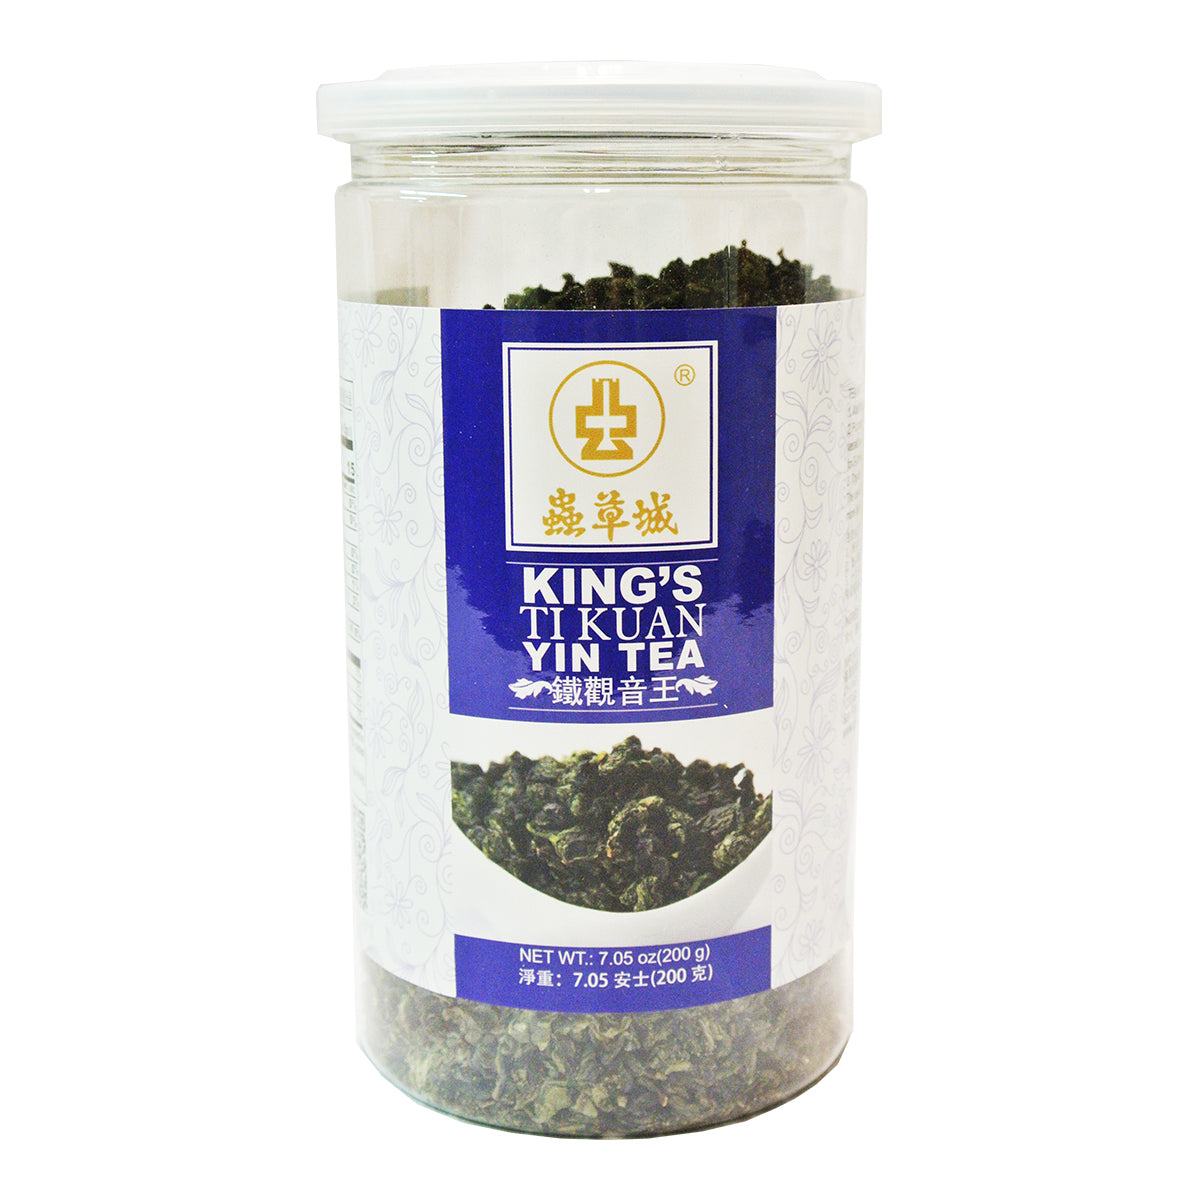 King's Ti Kuan Yin Tea 200g